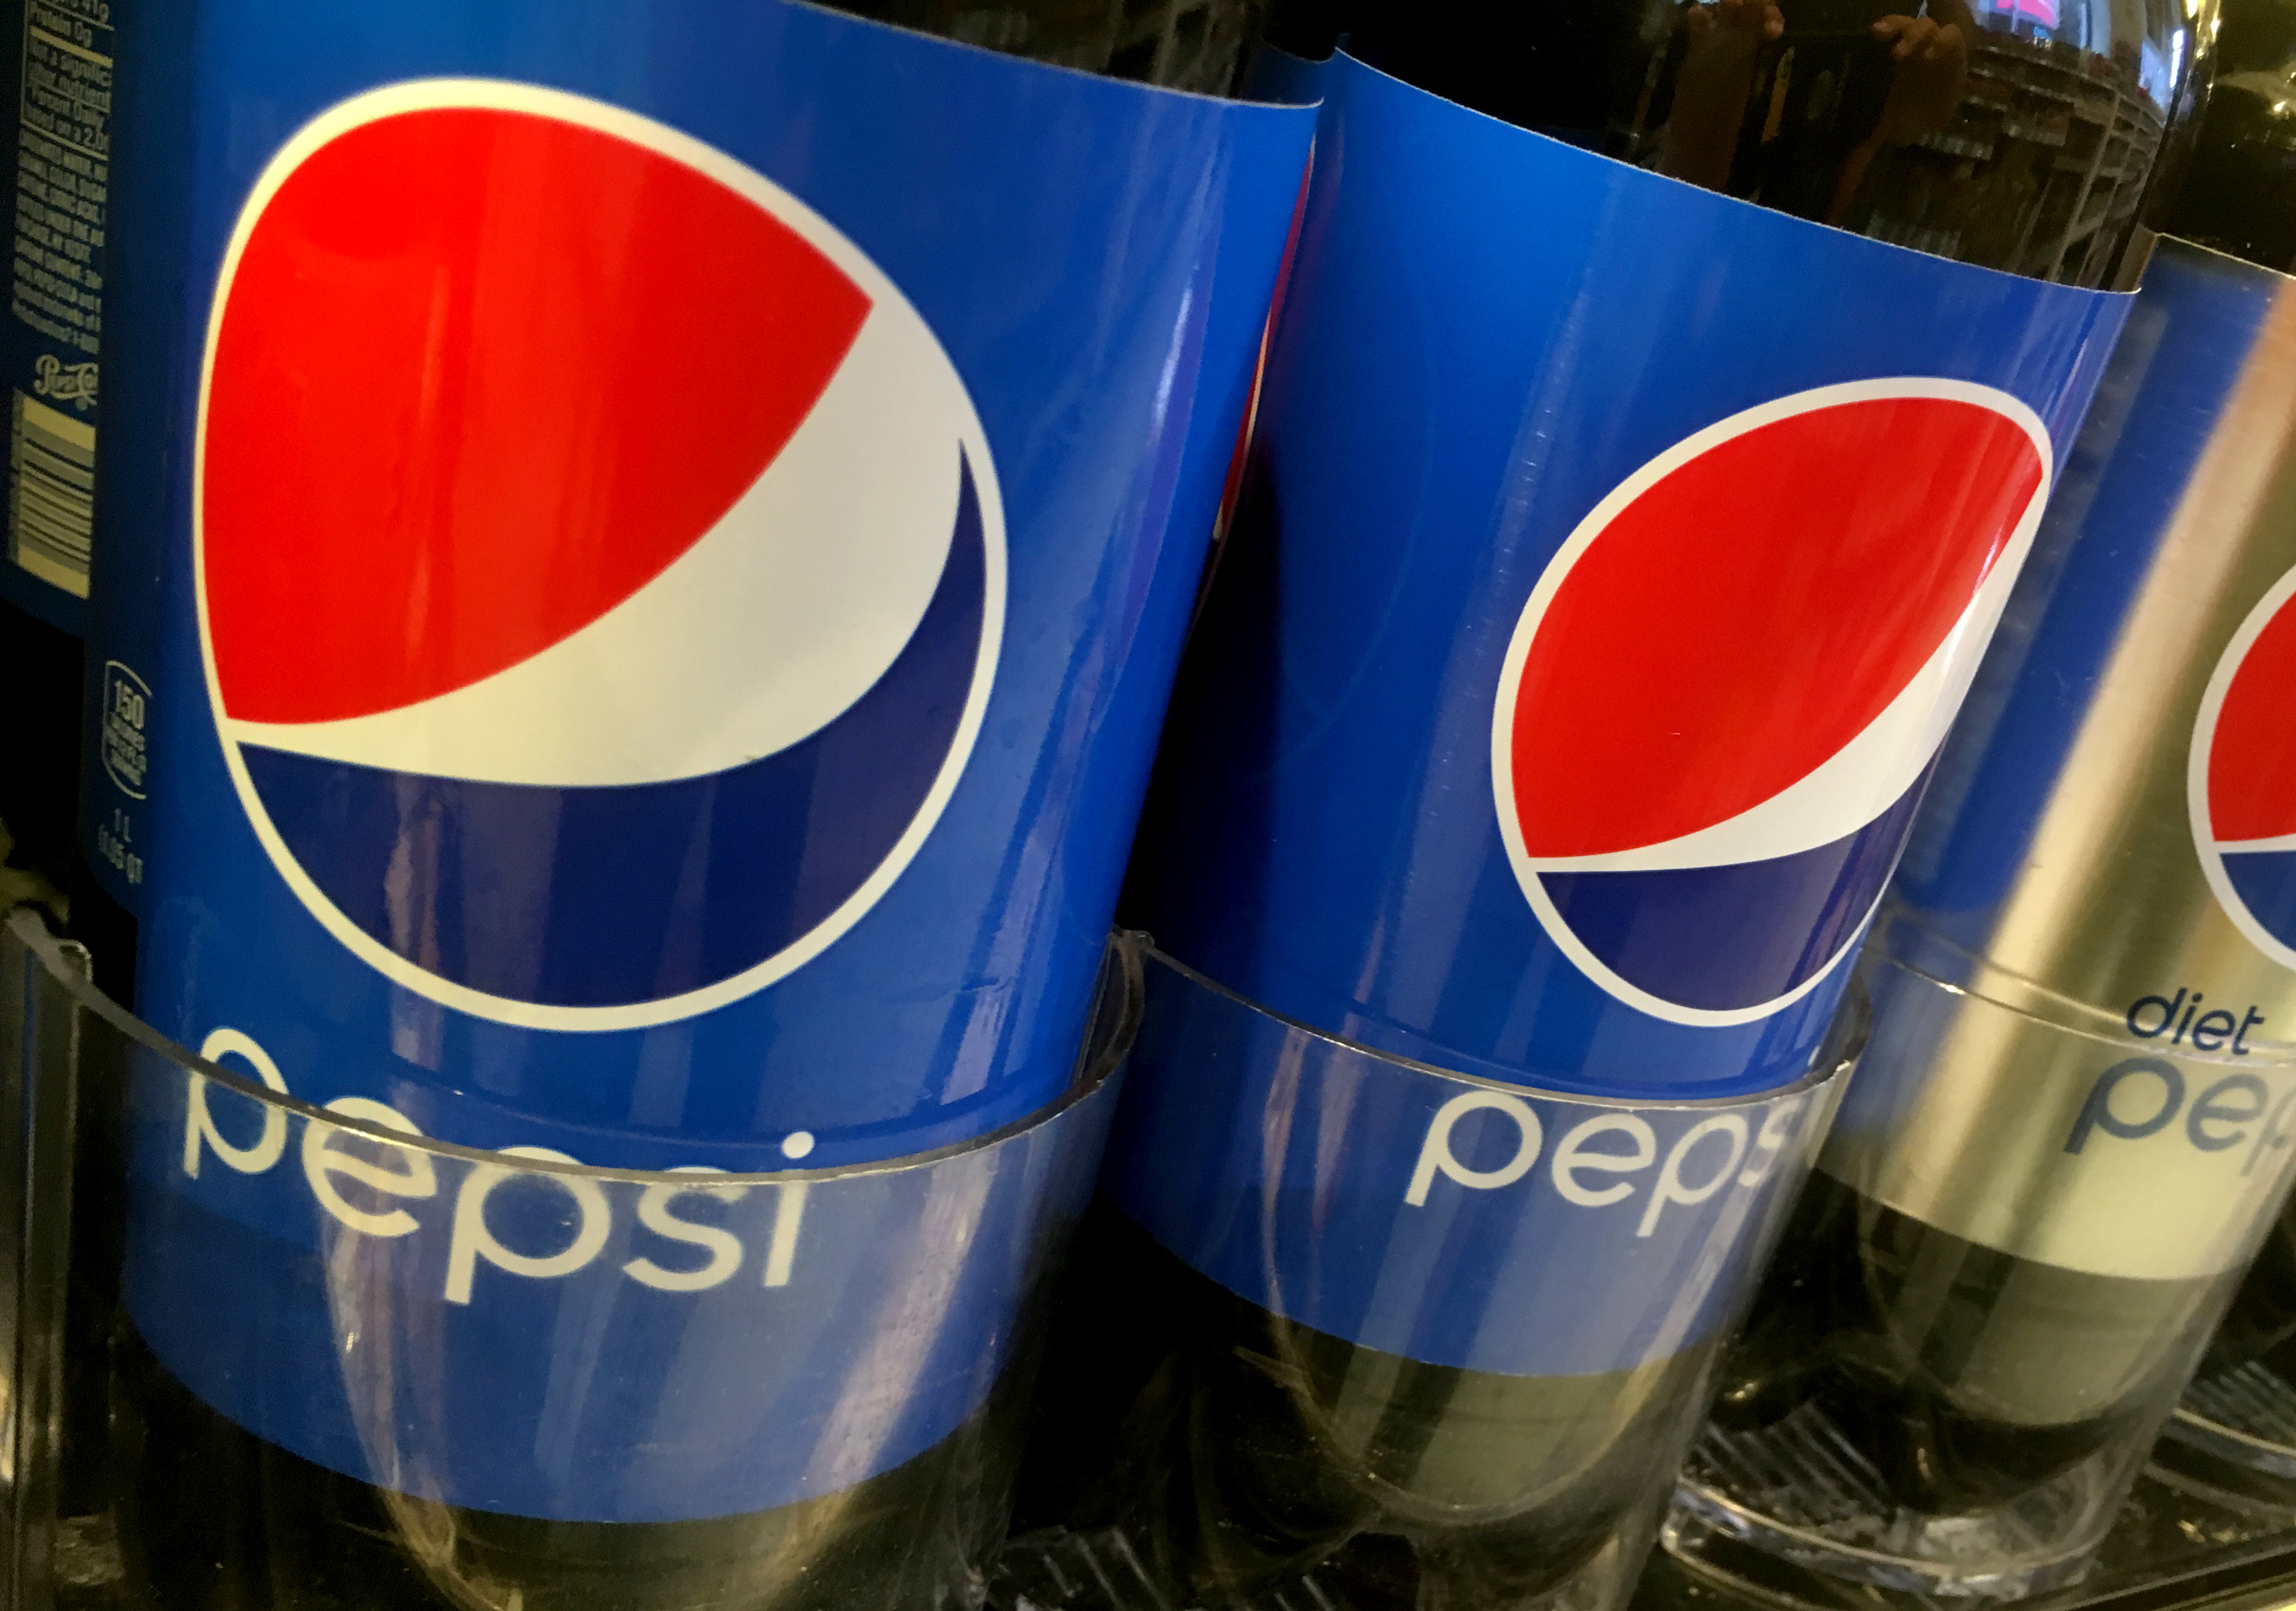 pollute, says over York sues New health it plastics hurt PepsiCo | Reuters